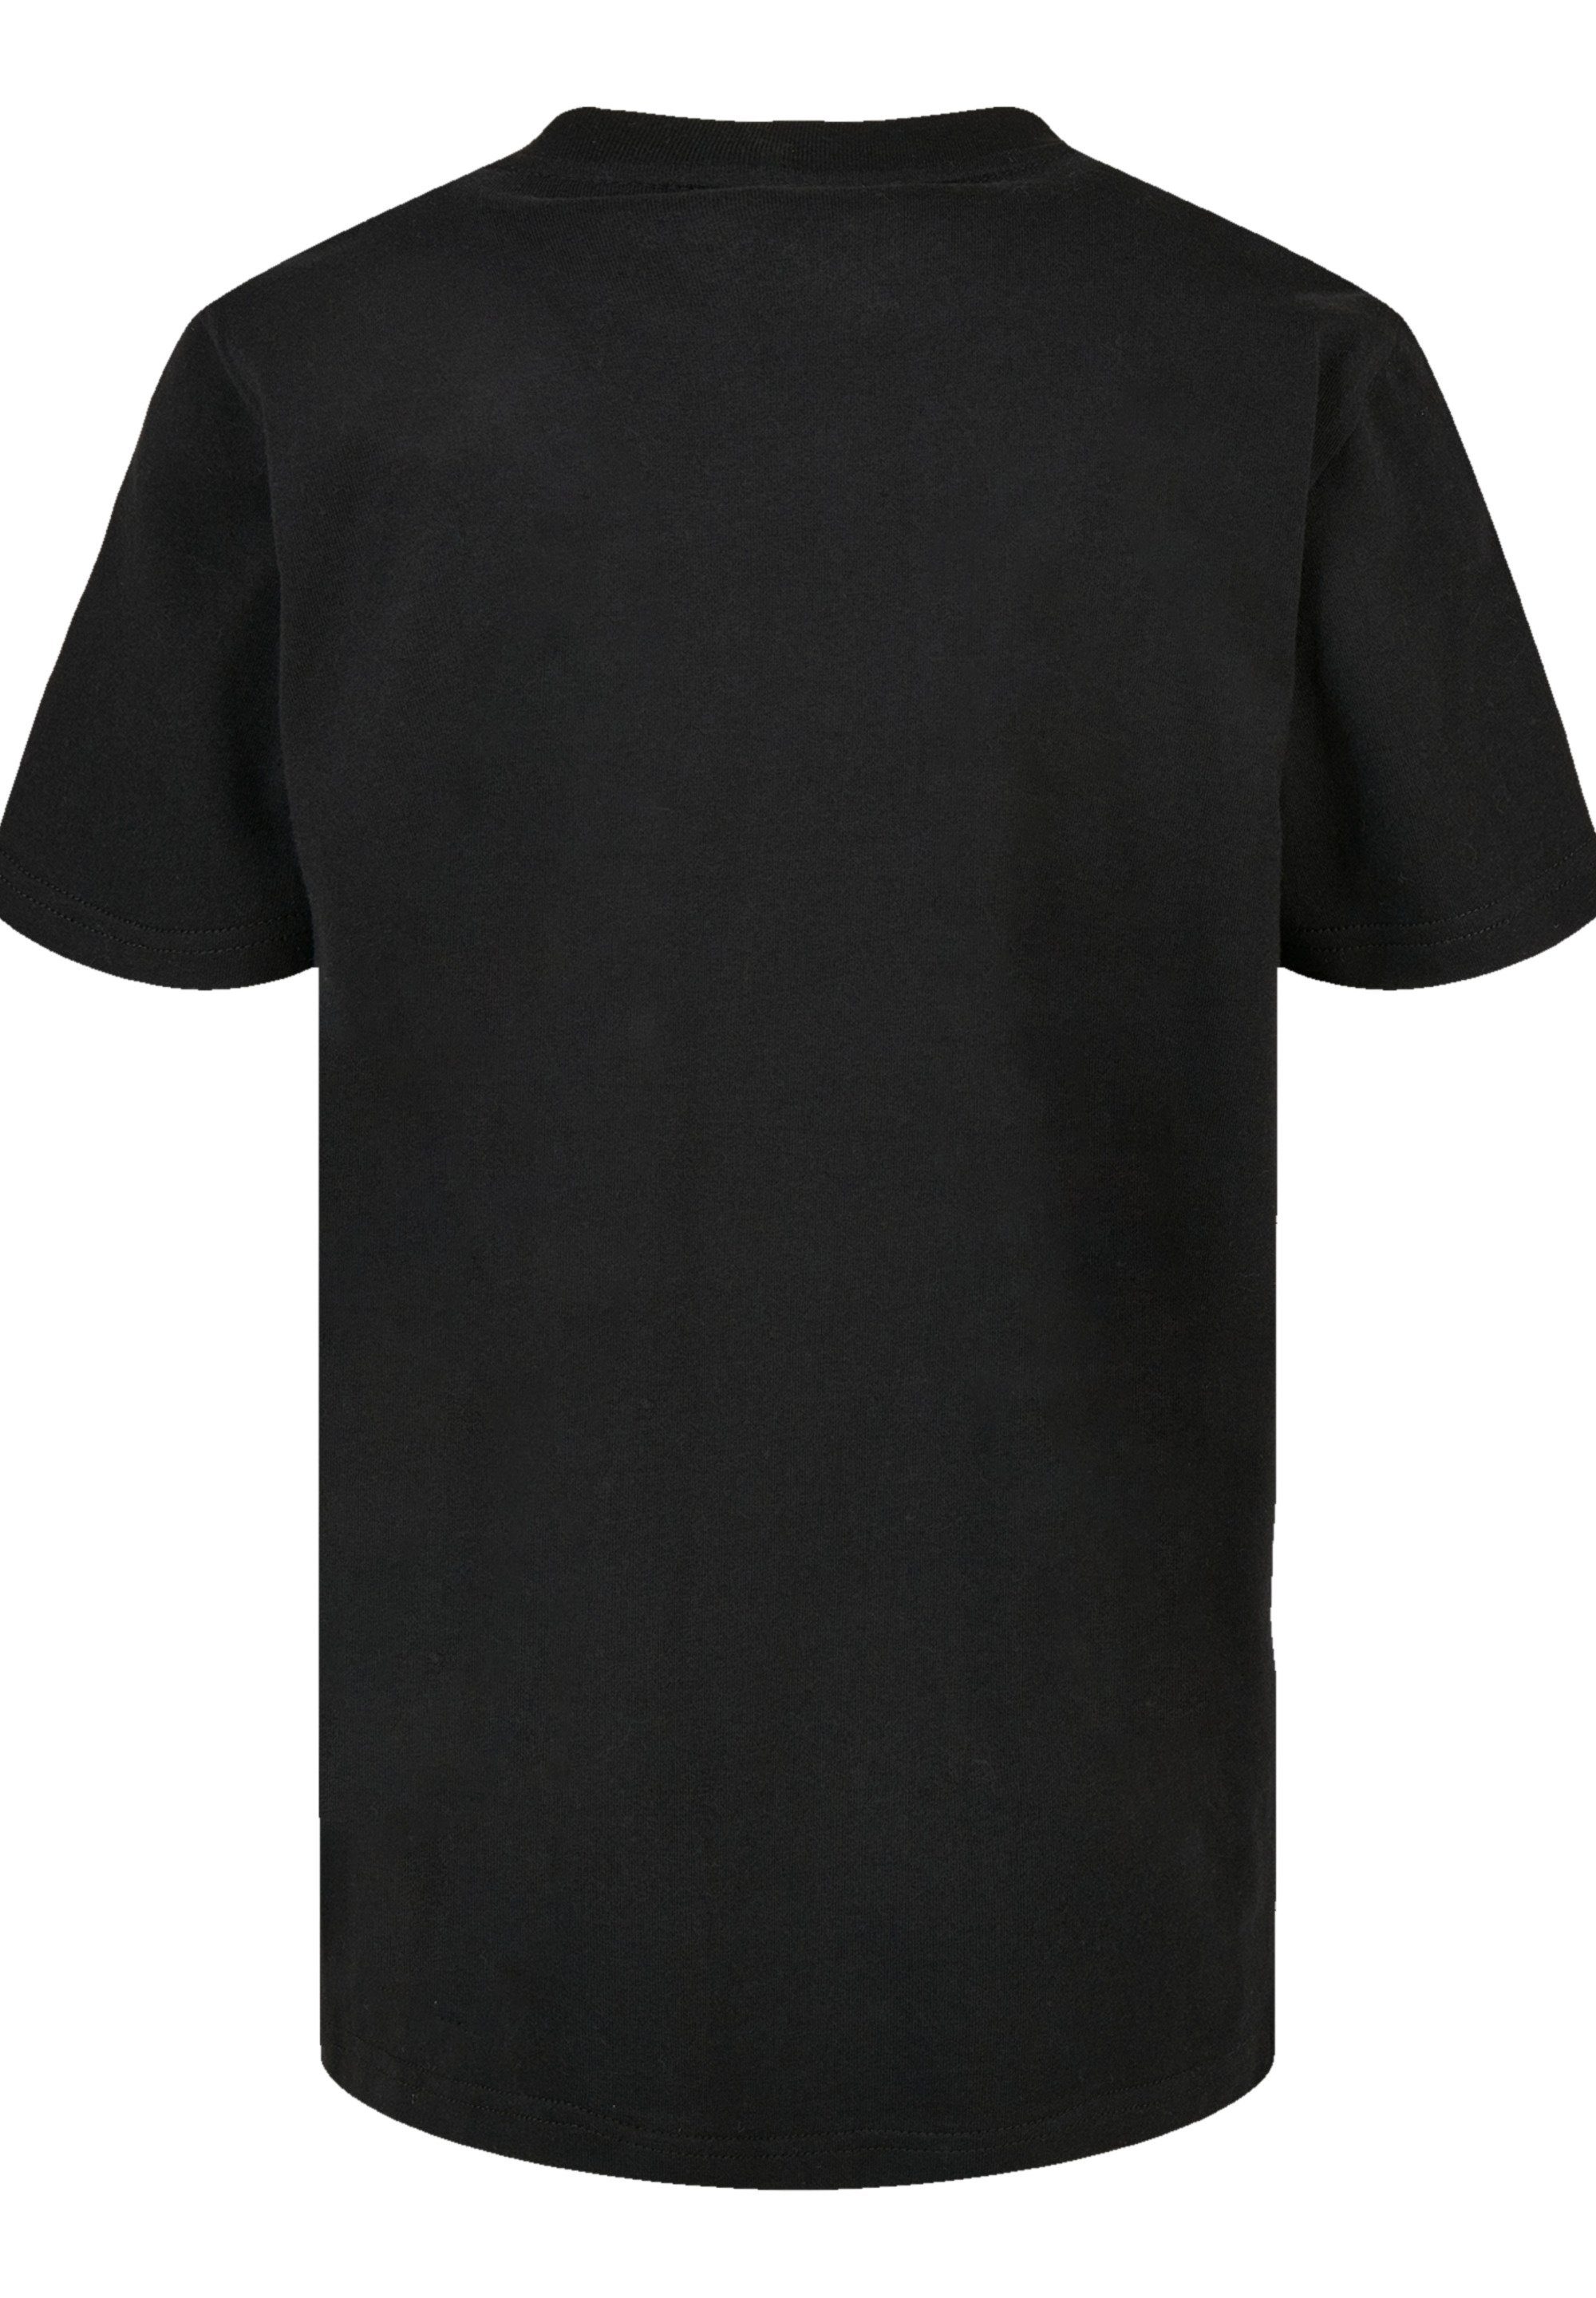 F4NT4STIC T-Shirt schwarz Skelett Print Halloween Yoga Namaste